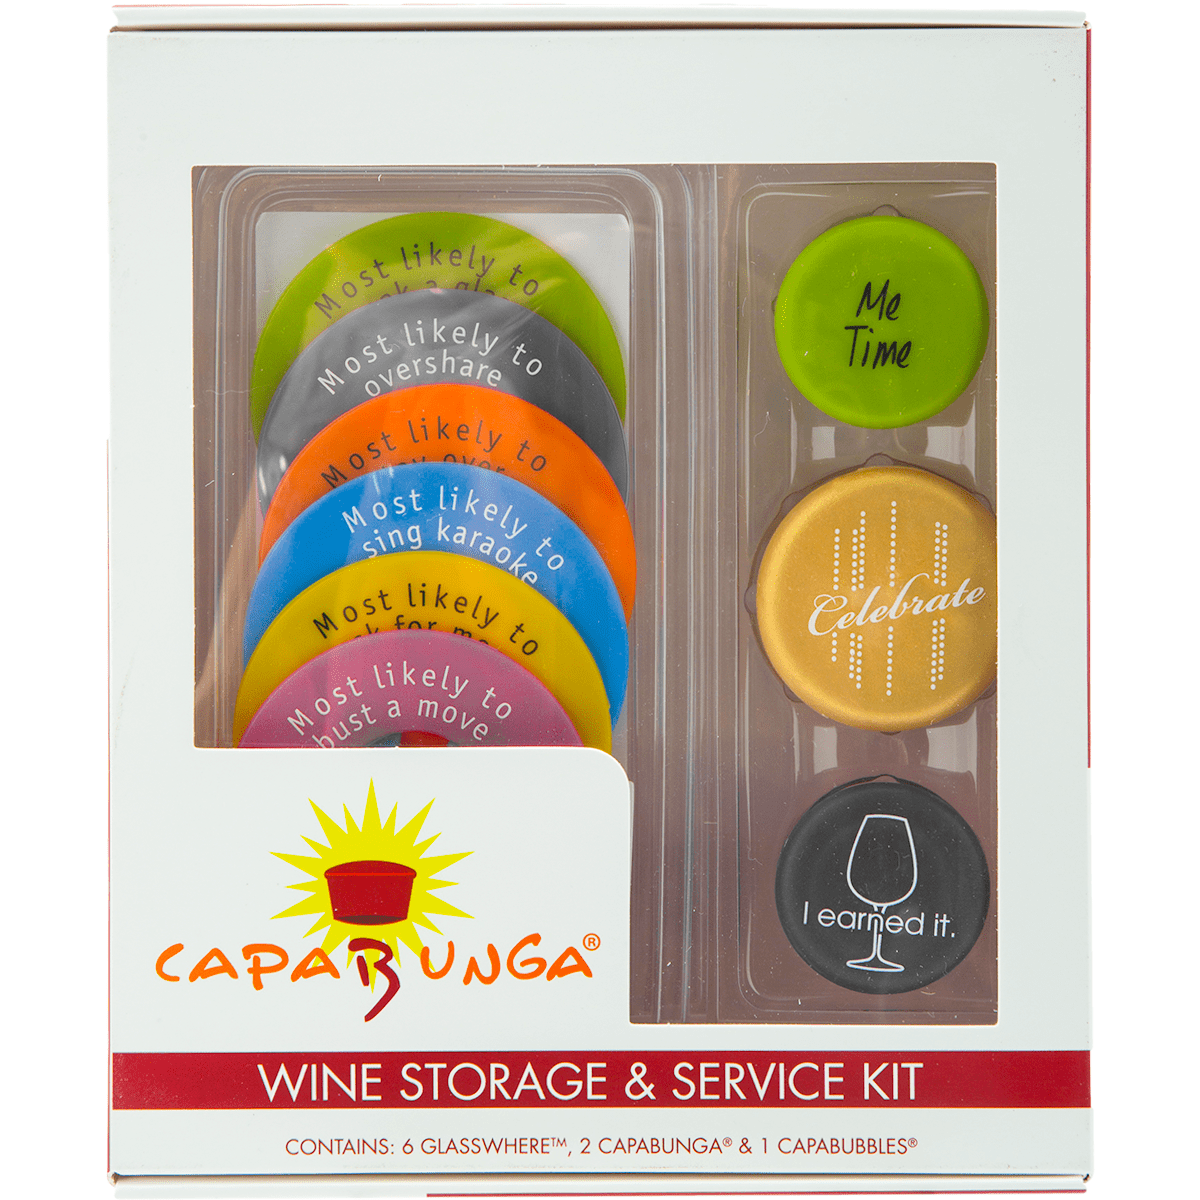 Capabunga Wine Storage And Service Kit - Slogans